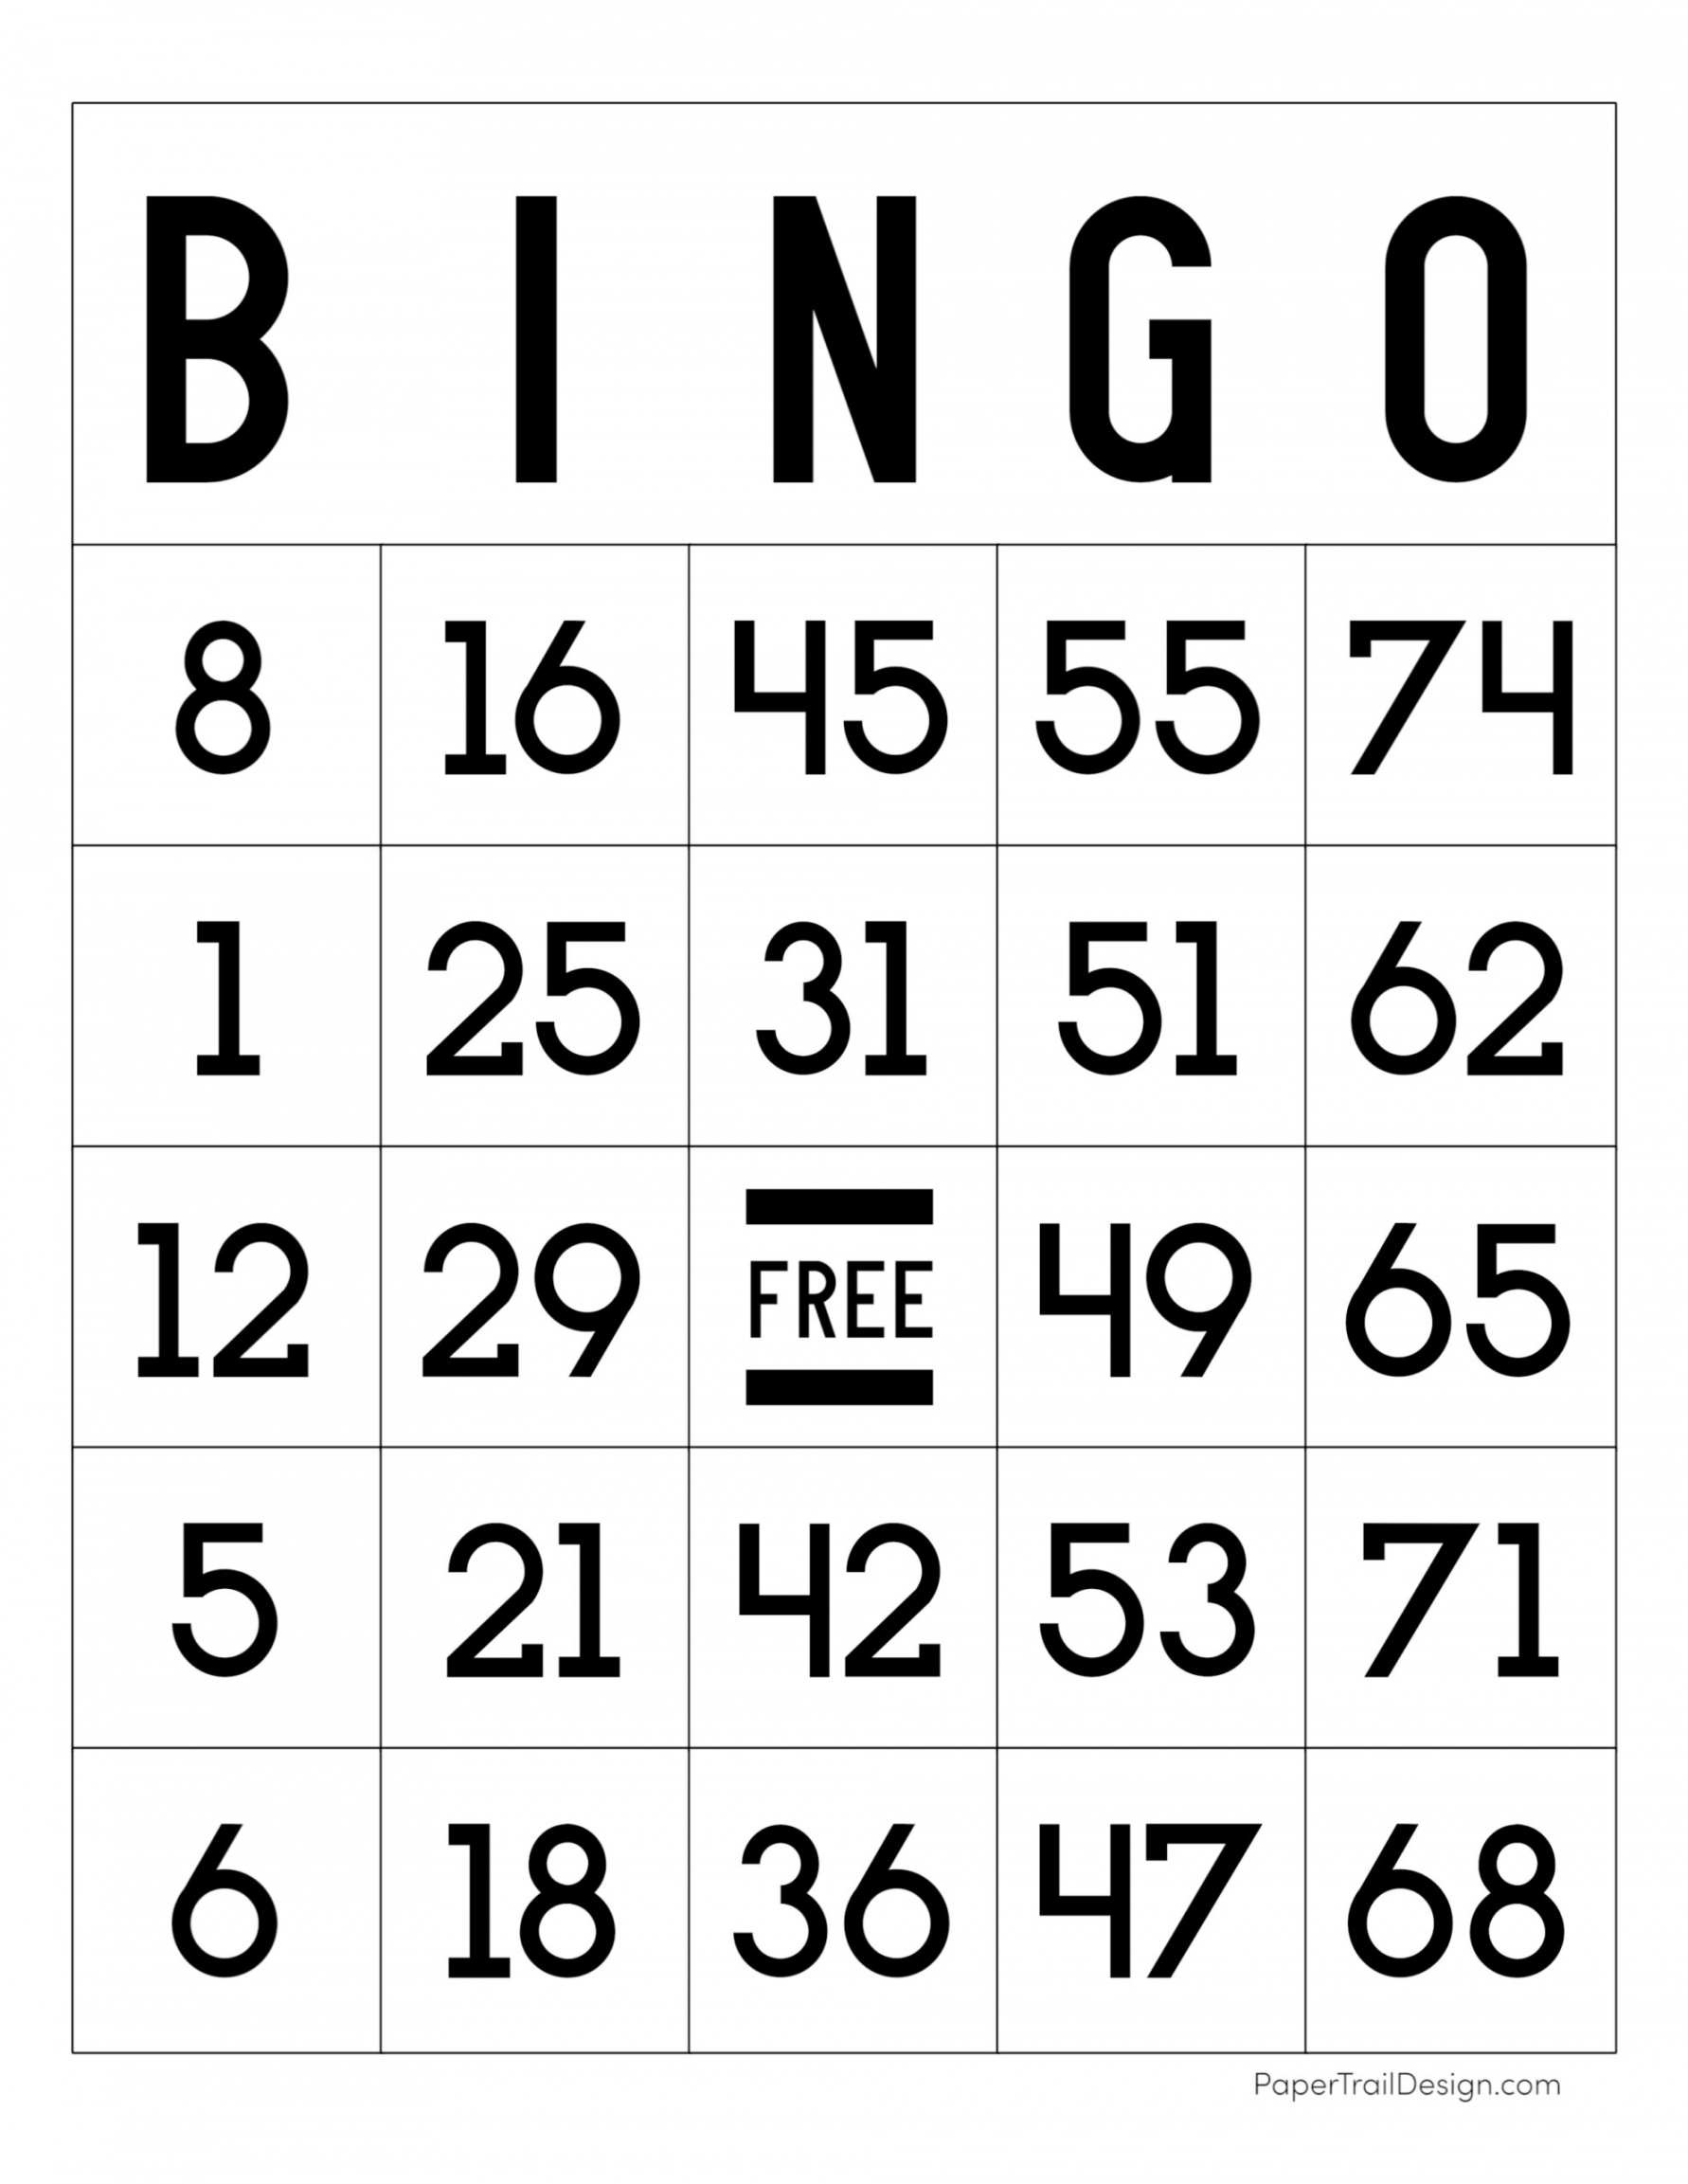 Bingo Cards Free Printable - Printable - Free Printable Bingo Cards - Paper Trail Design